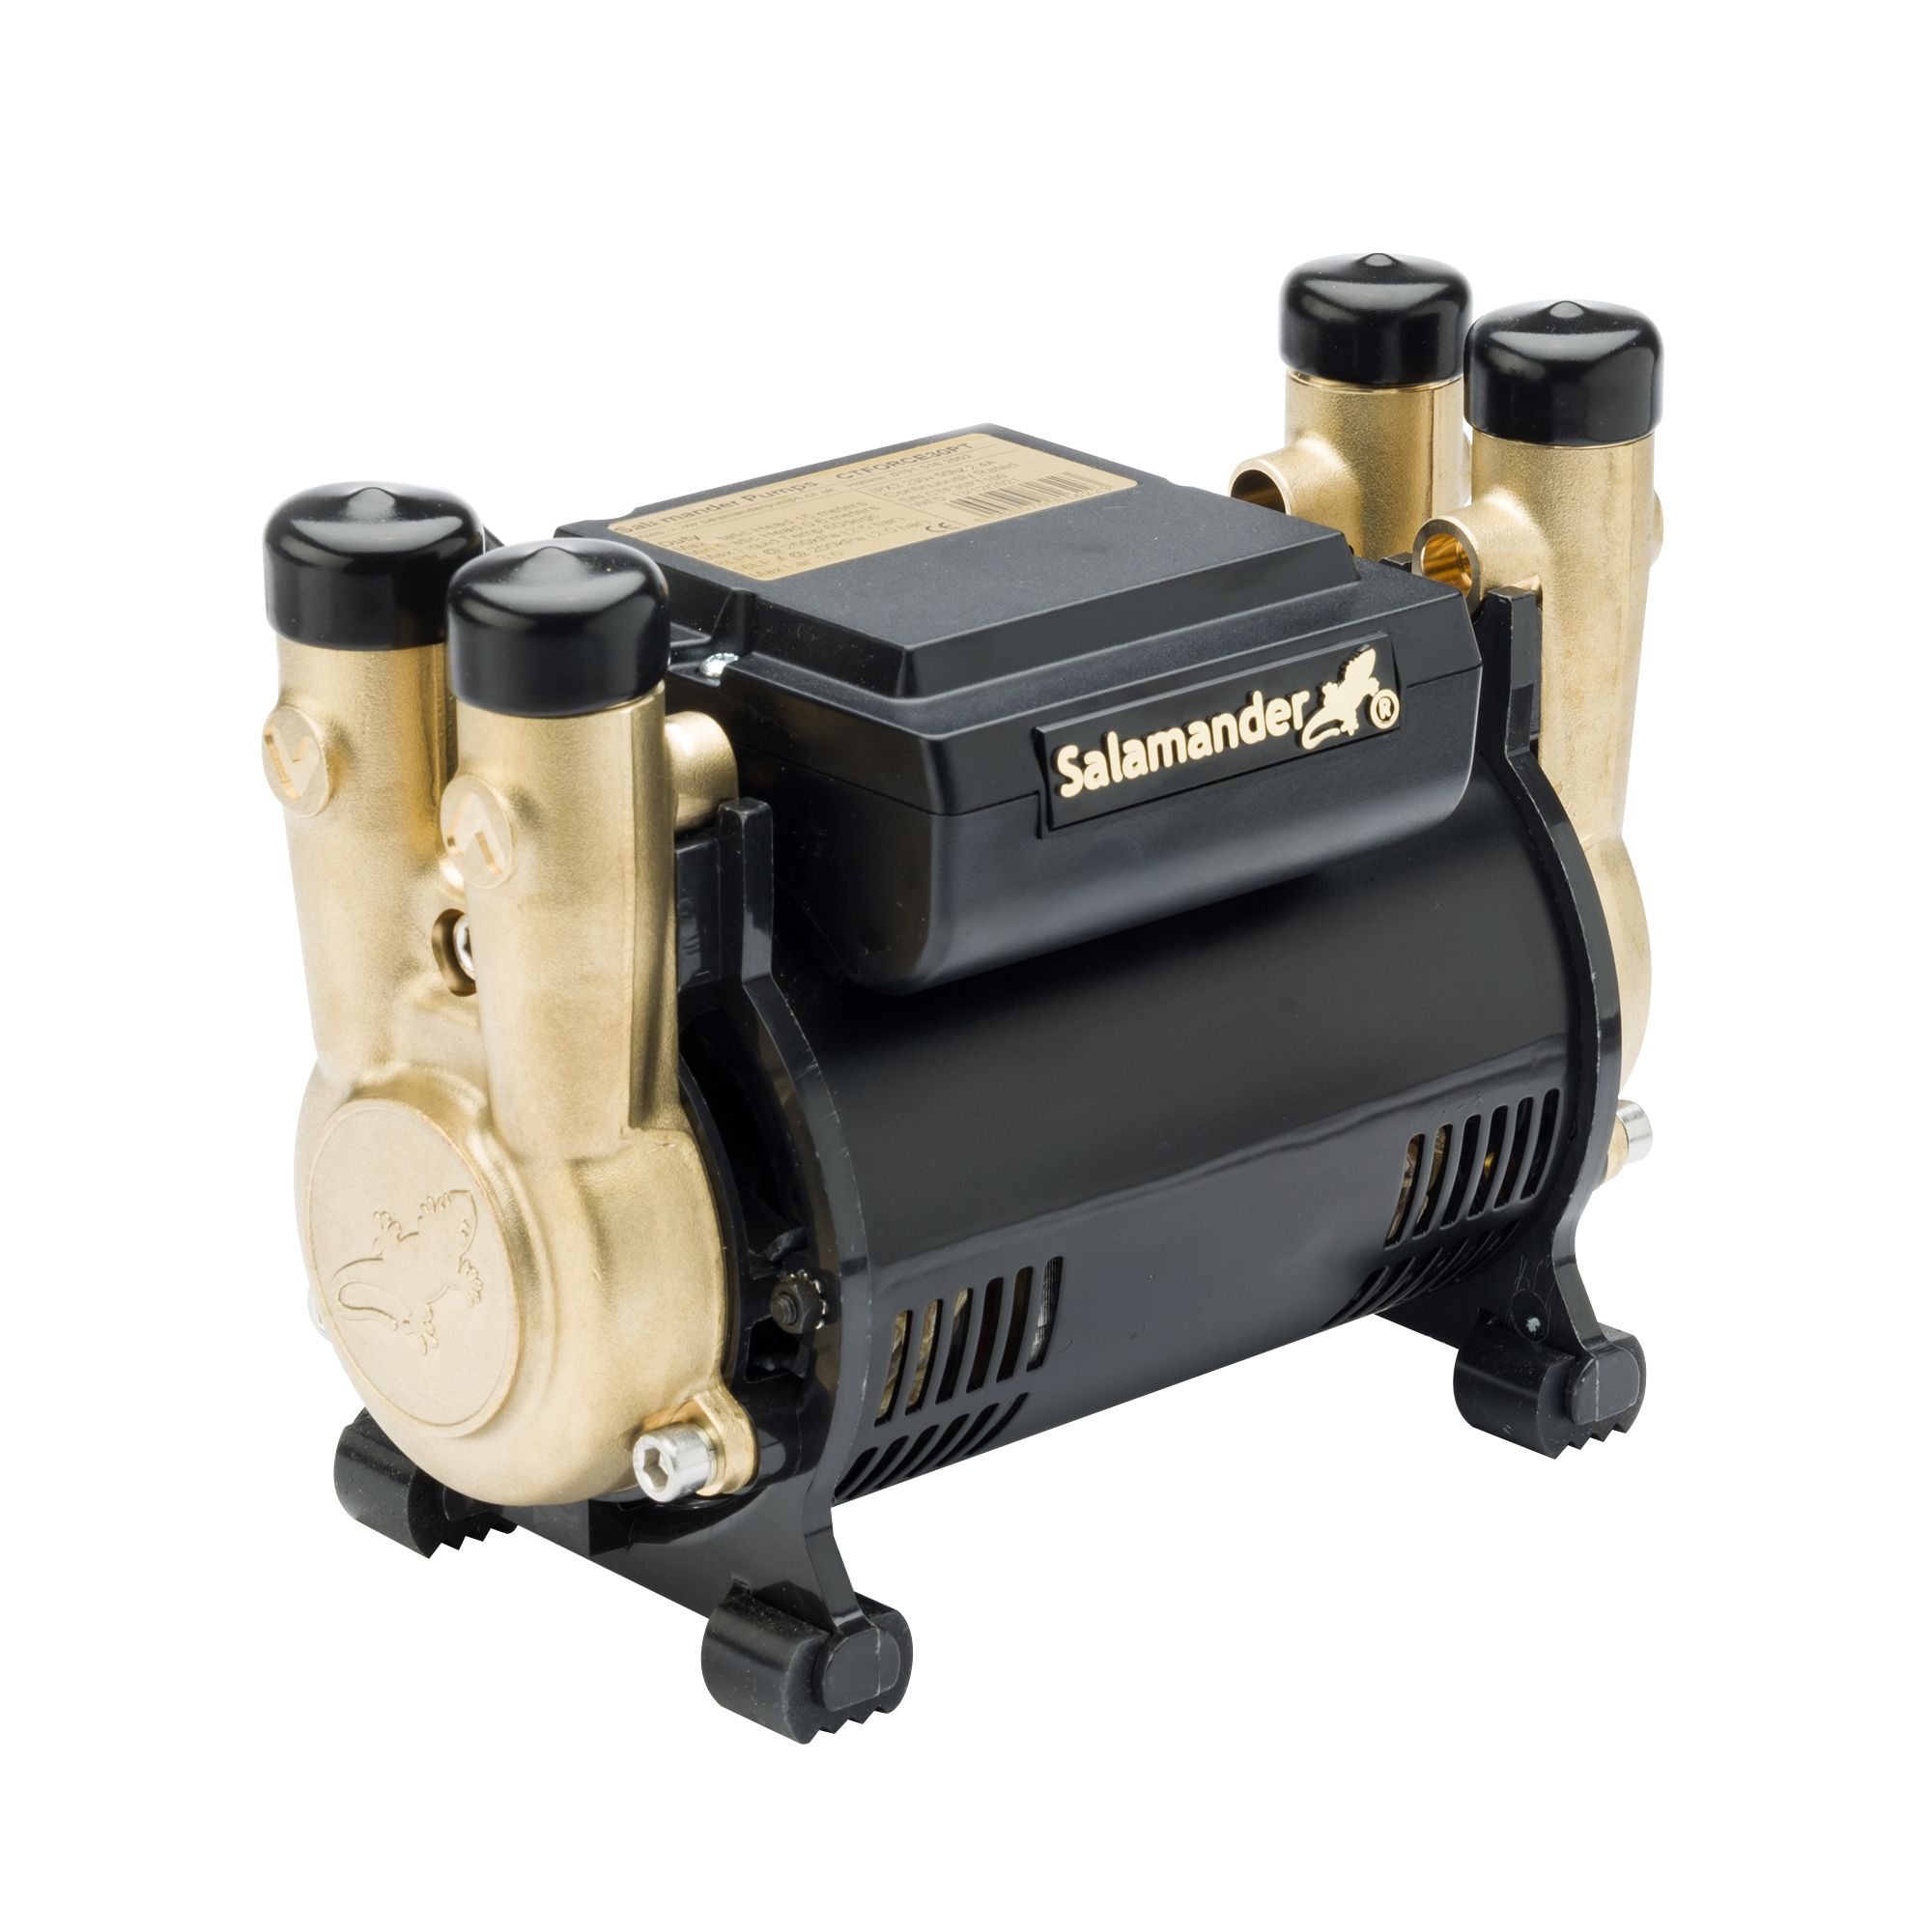 Pumps CTFORCE 30PT Twin 3 bar Shower pump (H)160mm (W)120mm (L)210mm | at B&Q